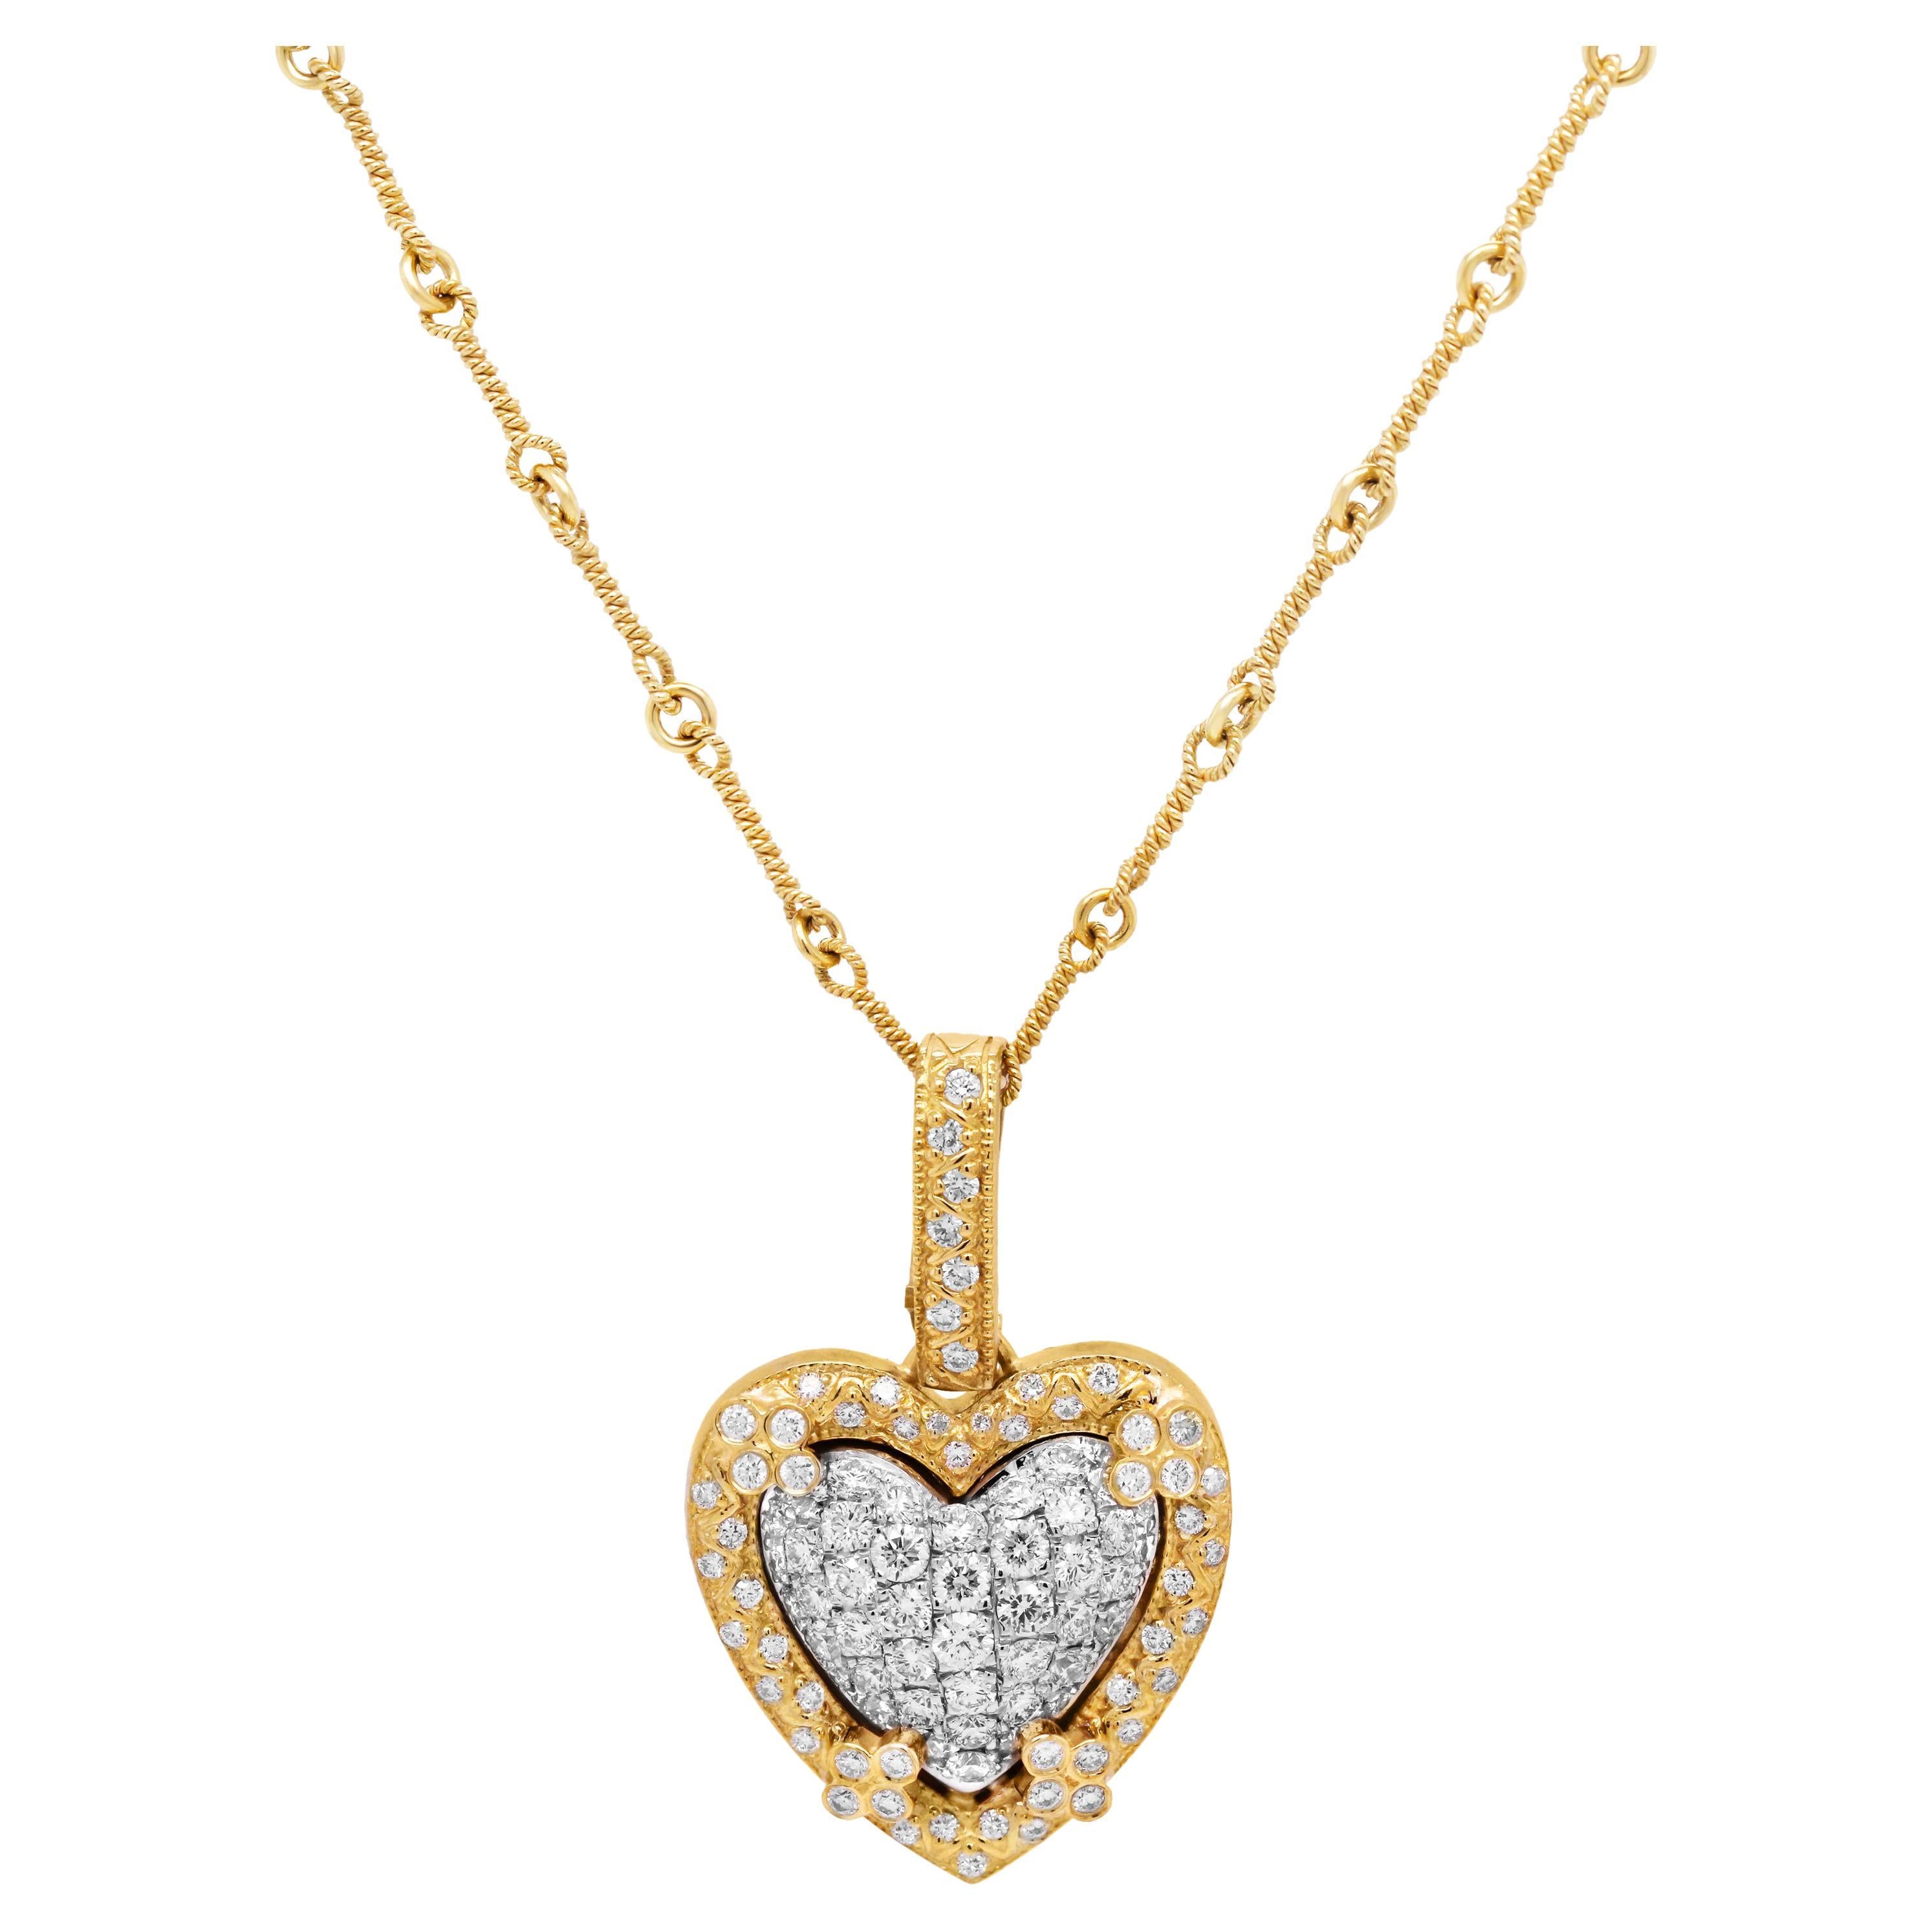 Stambolian, collier pendentif cœur en or jaune et blanc 18 carats avec diamants